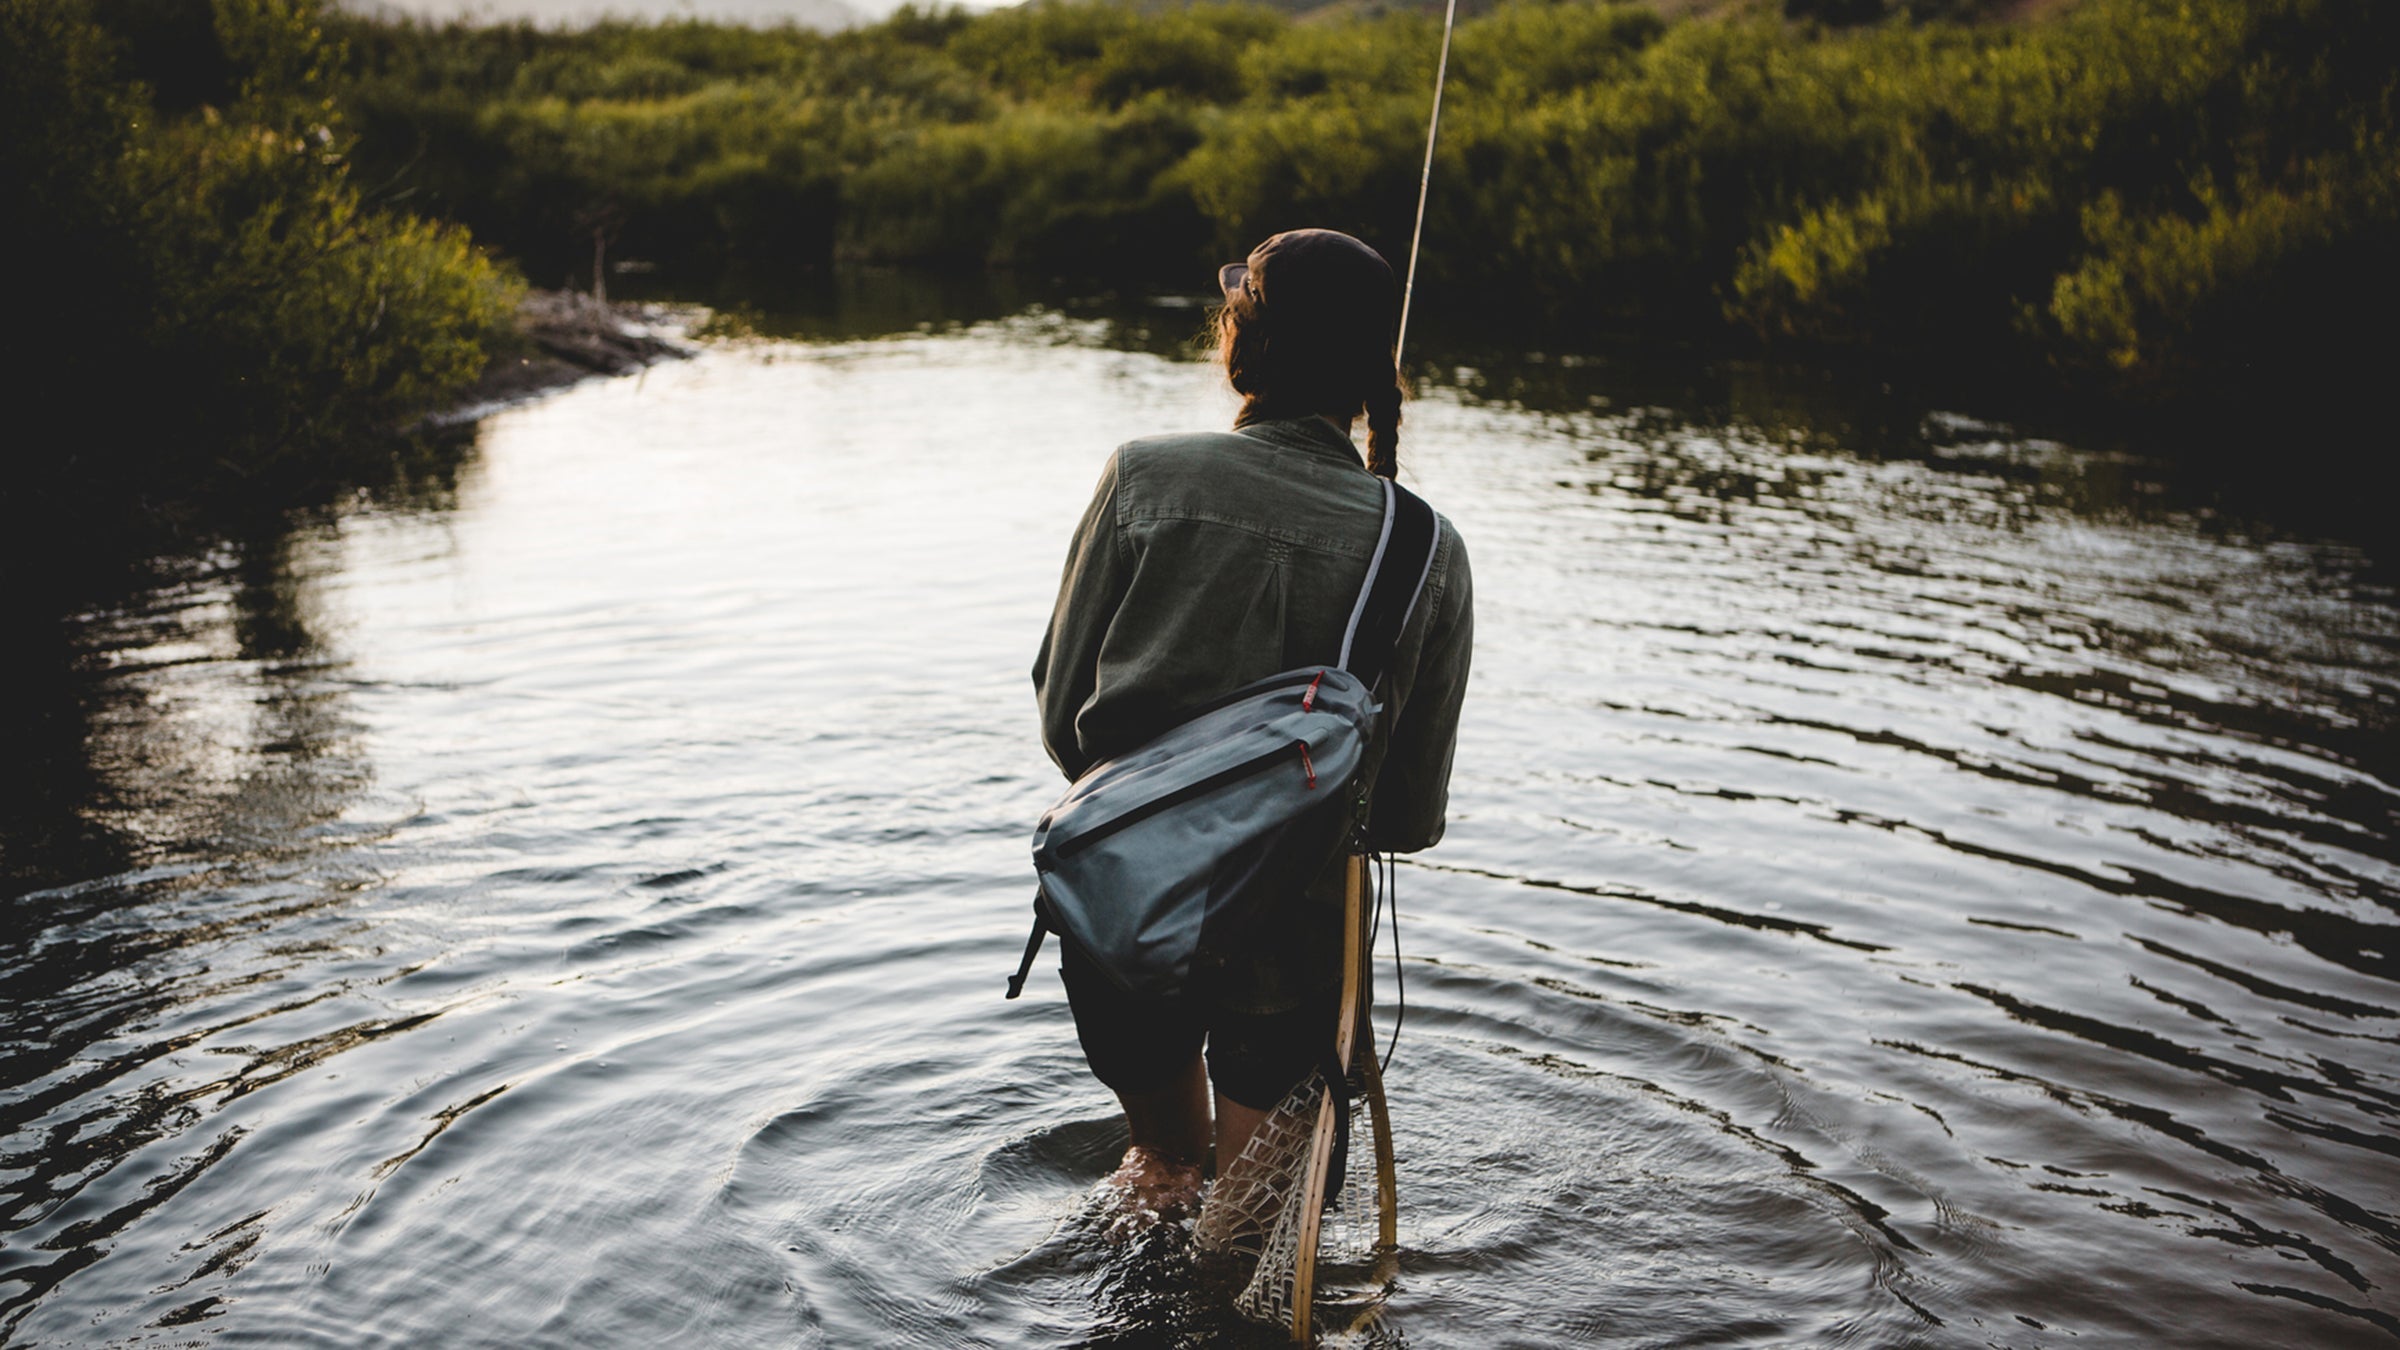 Fishing Gear Reviews  Find the Best Fishing Gear - Backpacker